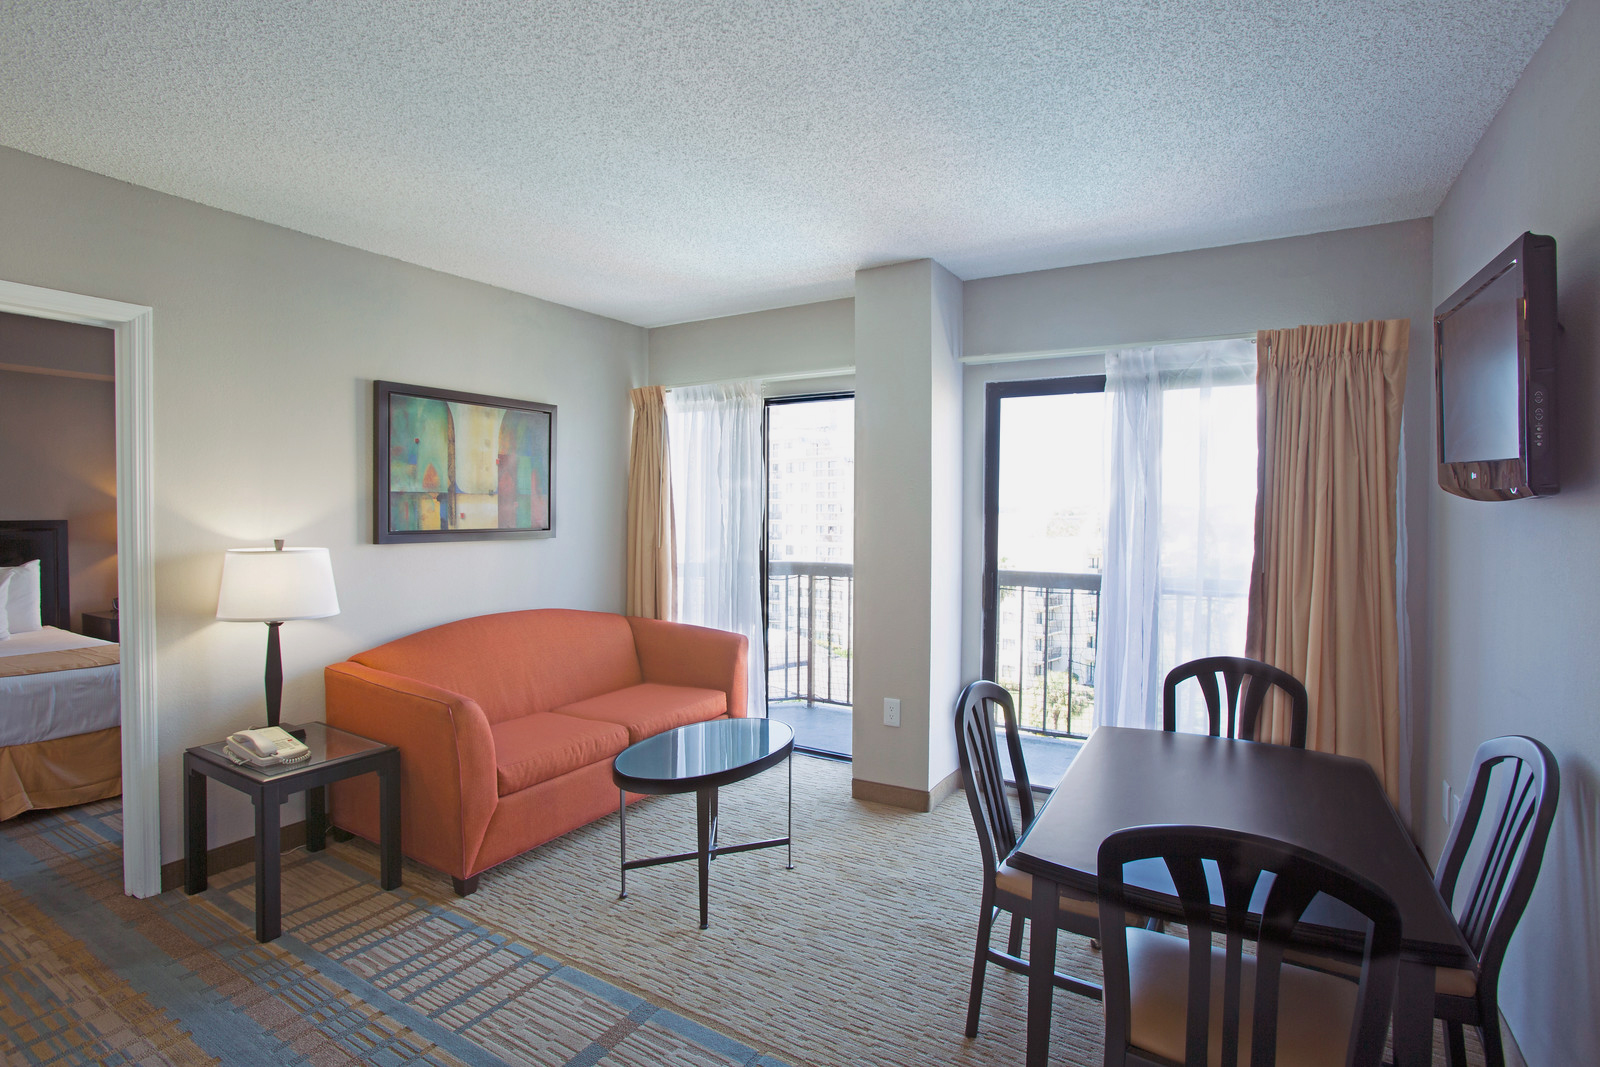 Orlando Hotel Suites Two Bedroom Suite The Enclave Hotel